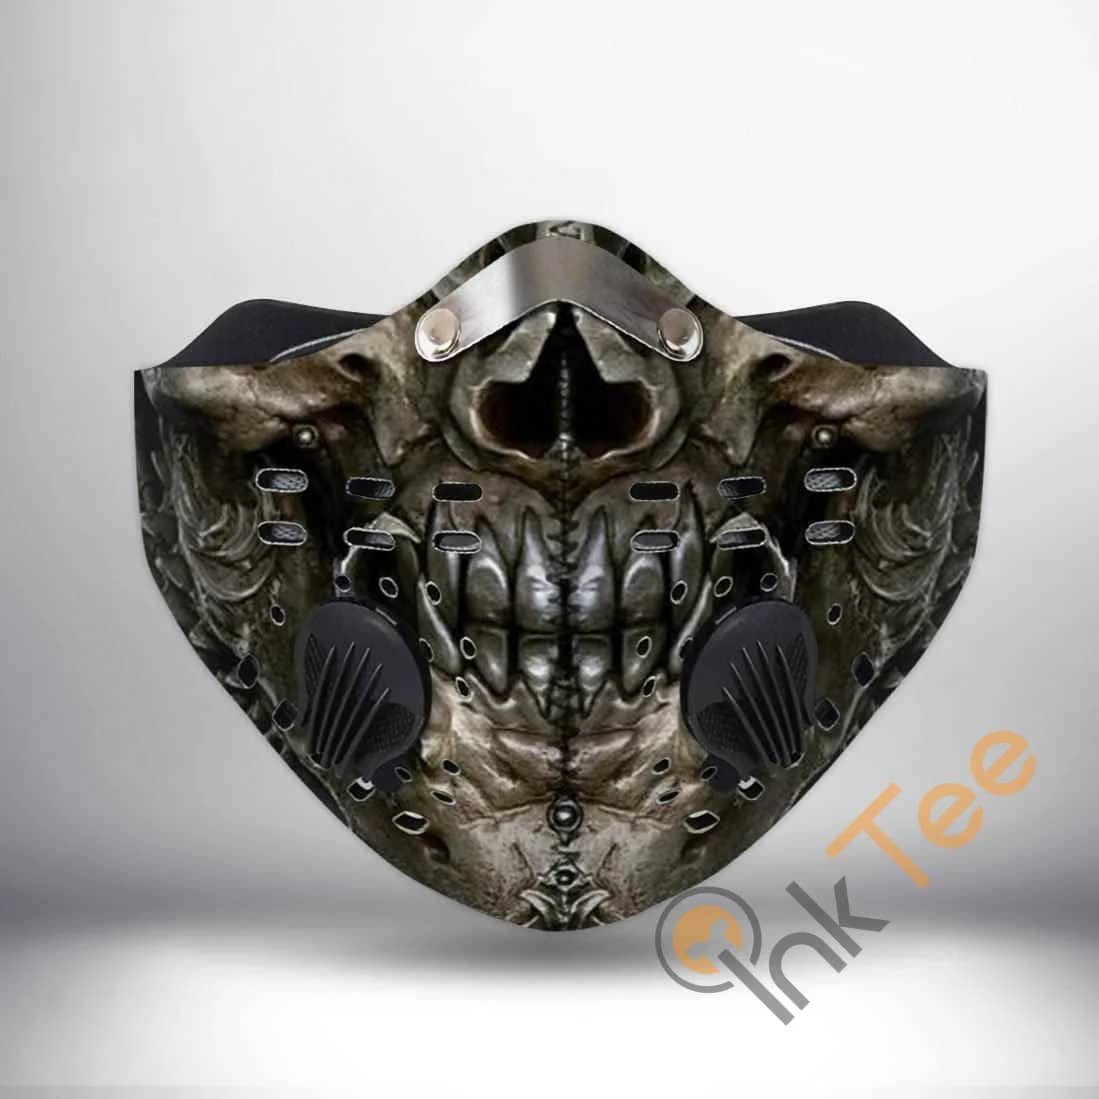 Skull Filter Activated Carbon Pm 2.5 Fm Sku 481 Face Mask